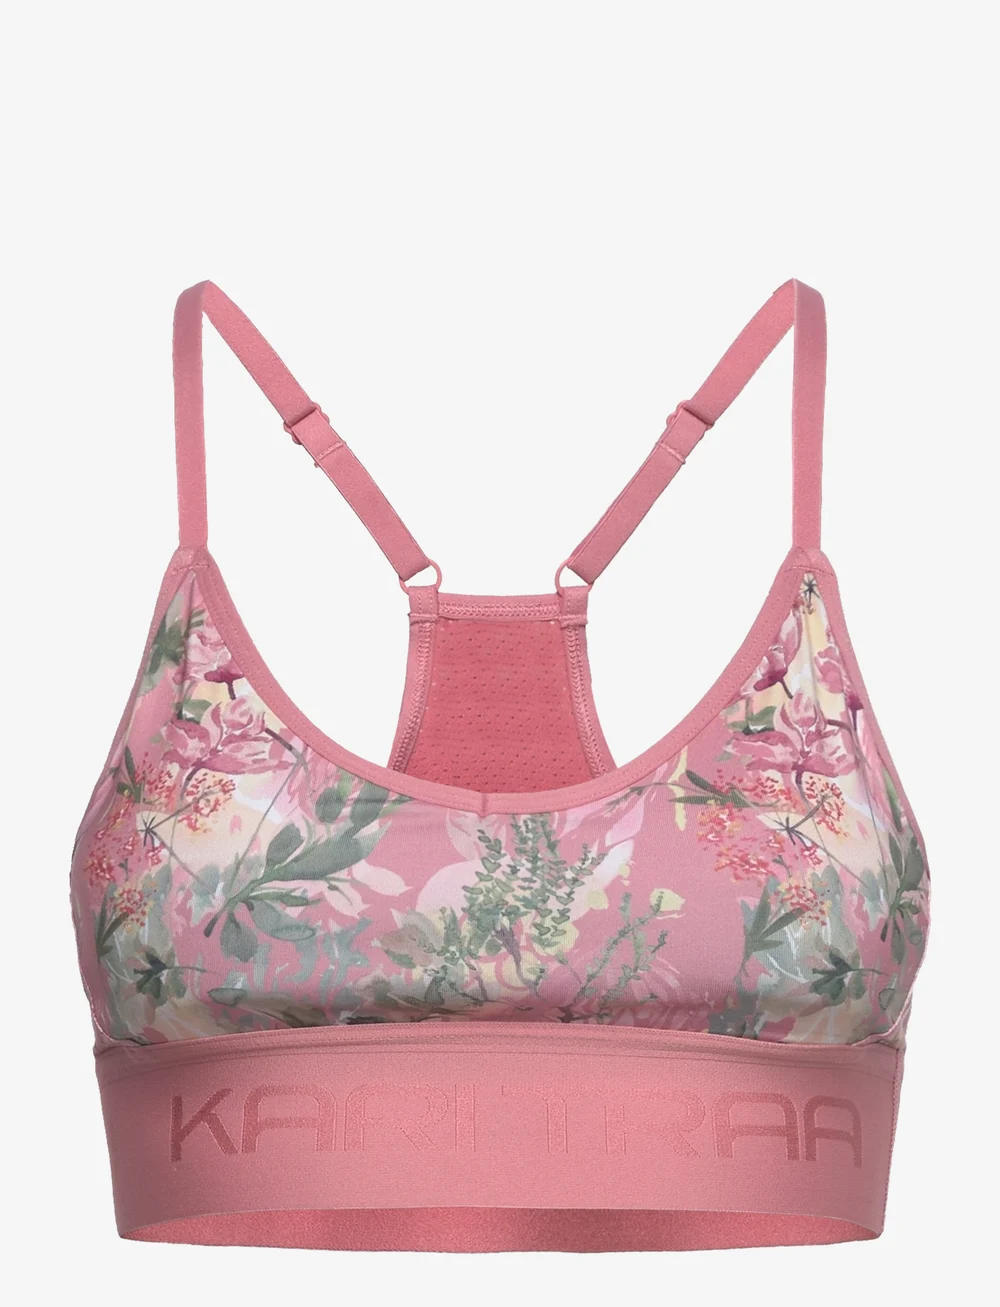 Kari Traa Var Printed – bras – shop at Booztlet